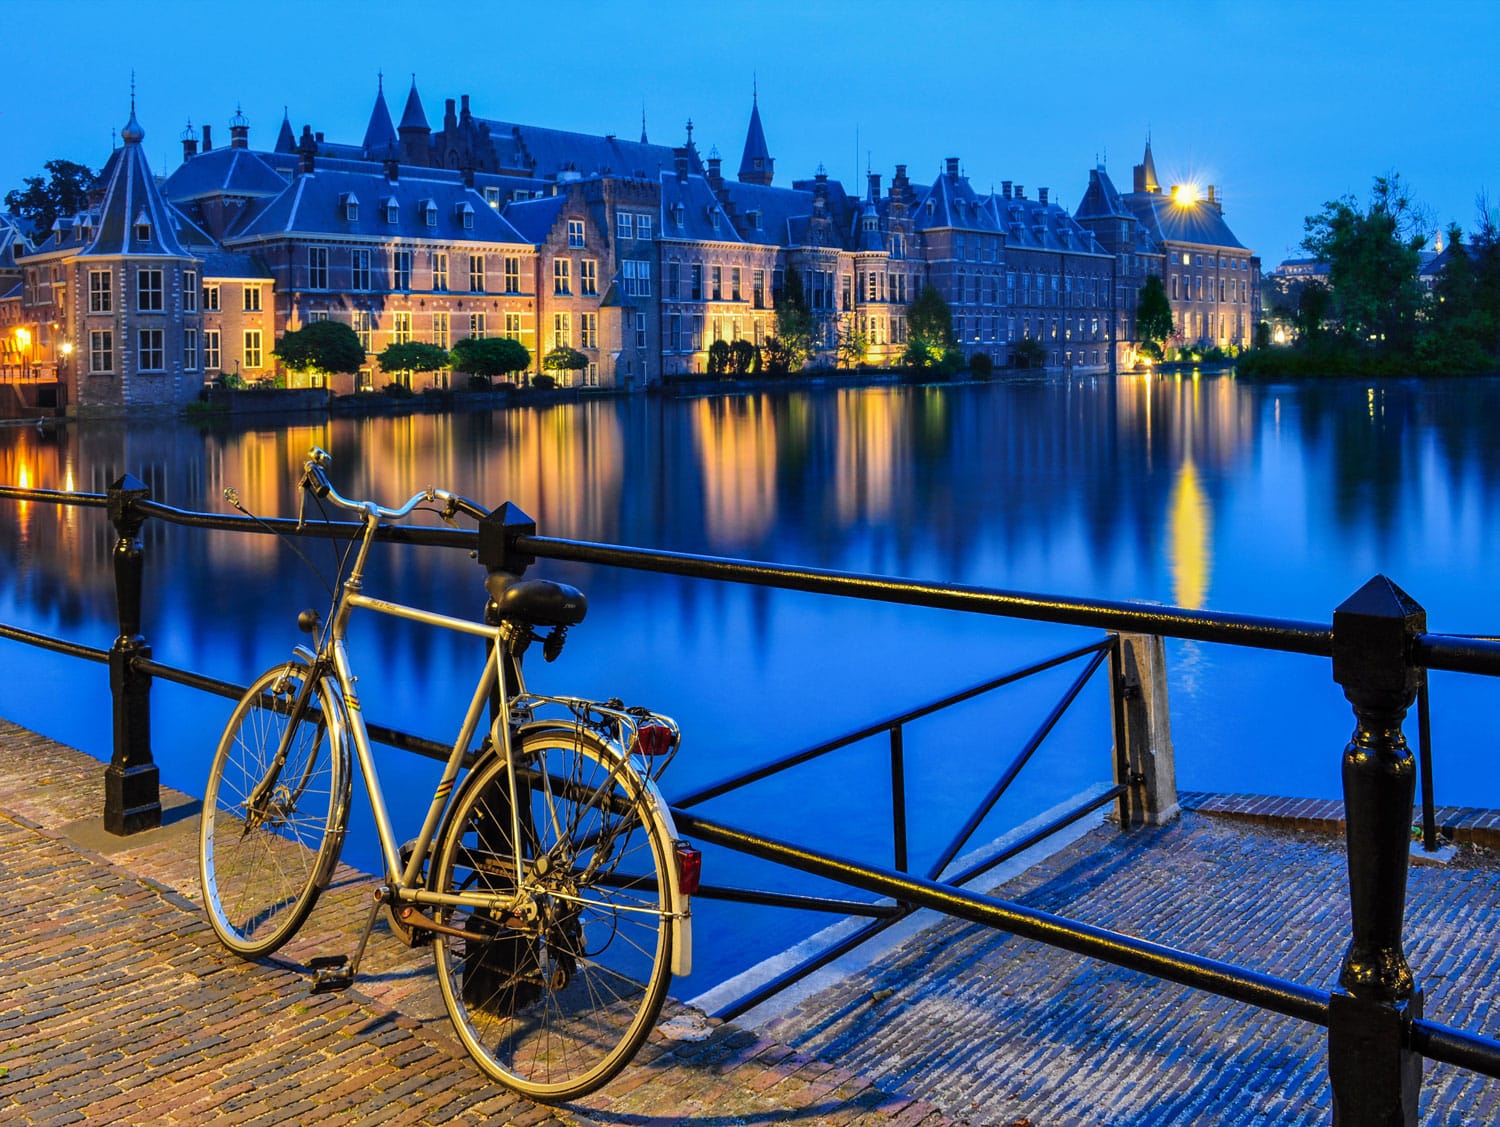 Bike on a canal in The Hague, close to Binnenhof